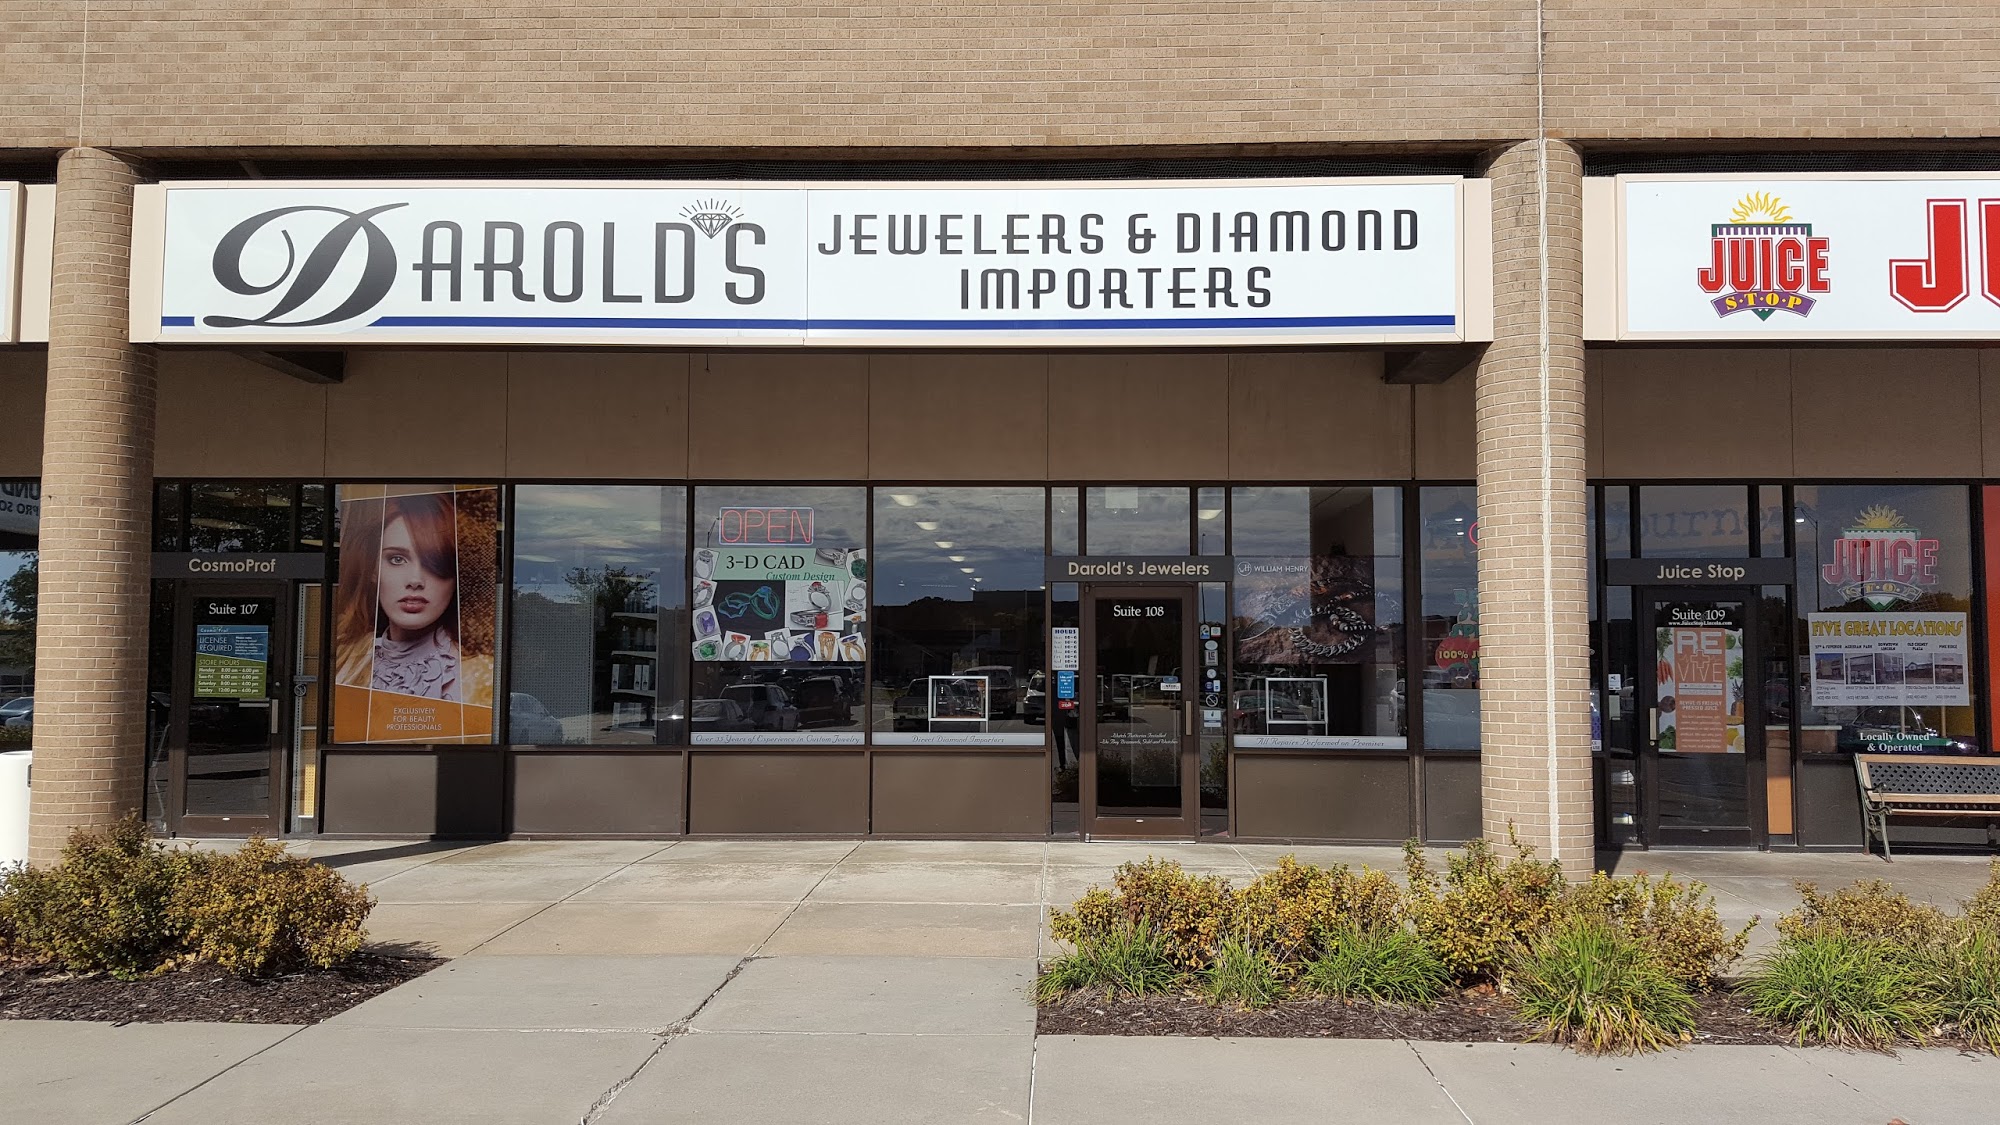 Darold's Jewelers & Diamond Importers